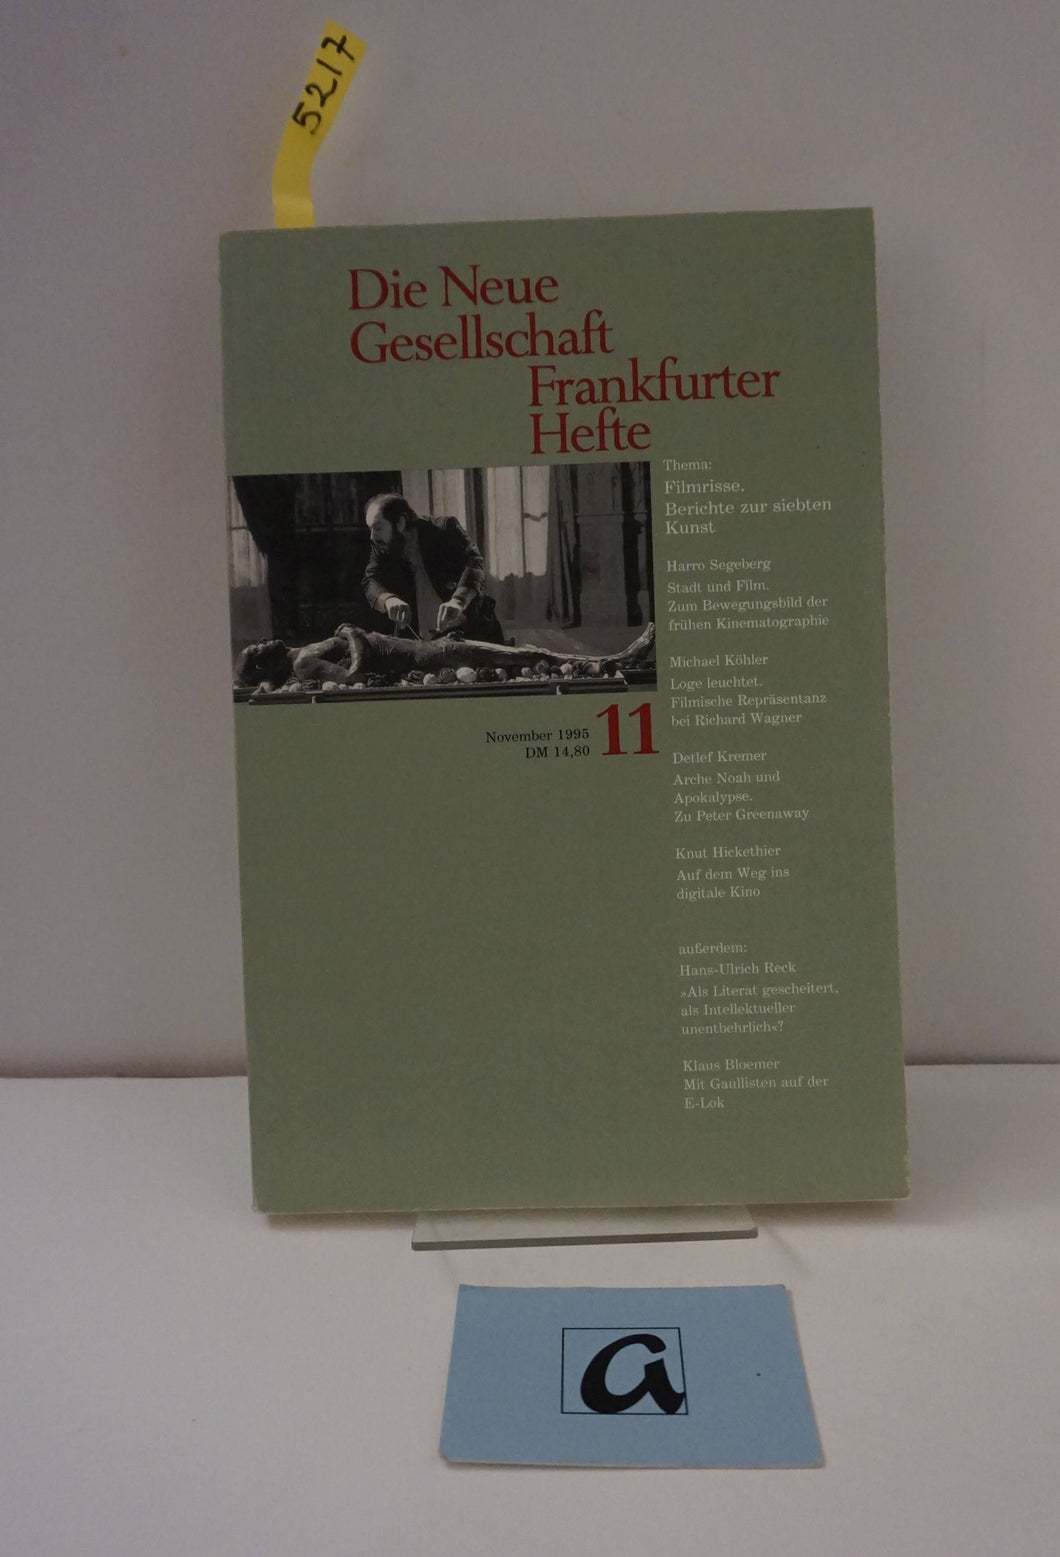 Die Neue Gesellschaft Frankfurter Hefte November (11), 1995